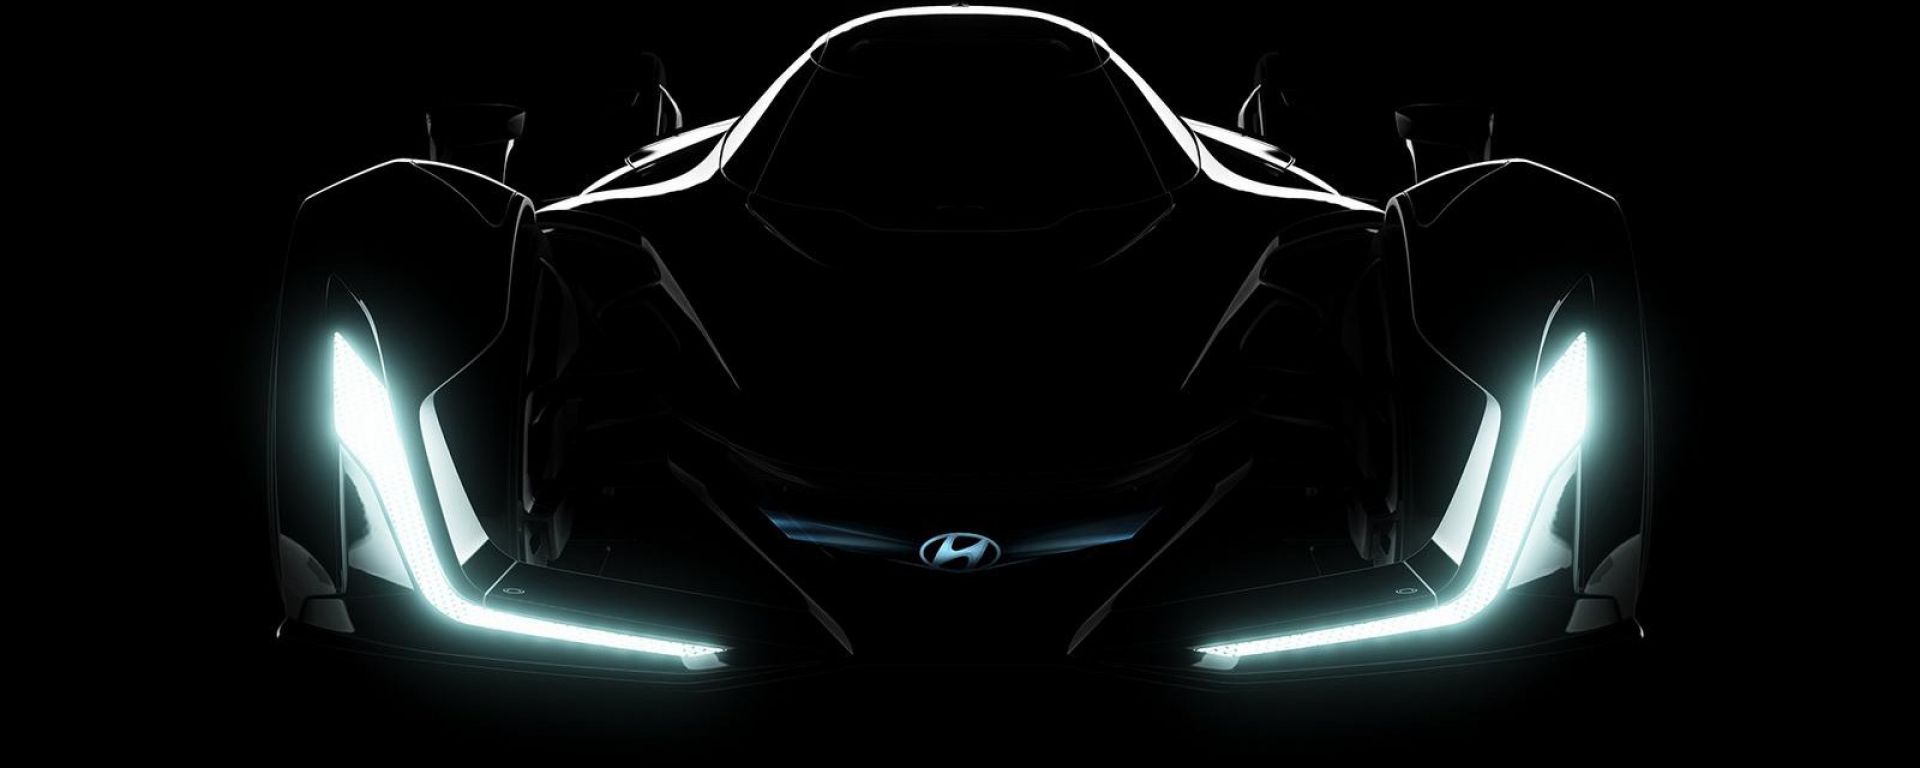 2015 Hyundai N 2025 Vision Gran Turismo Concept